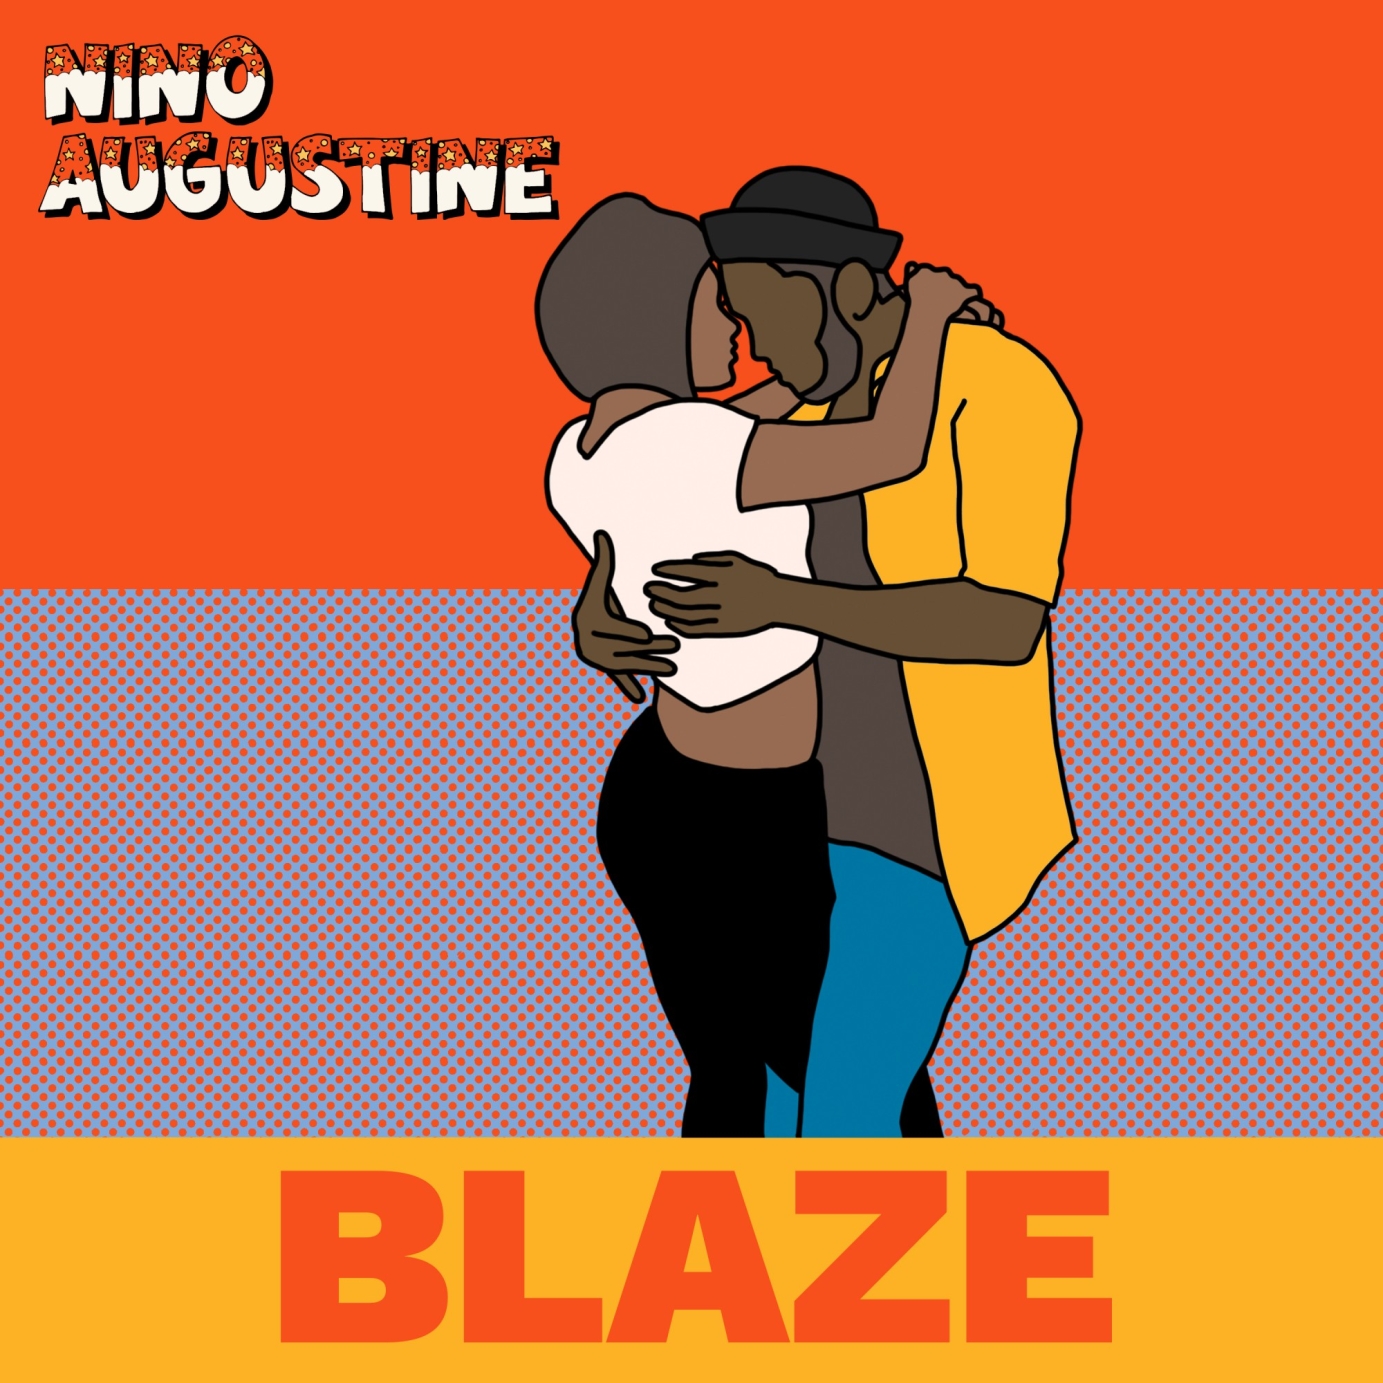 Blaze Single Cover & Animated Teasers